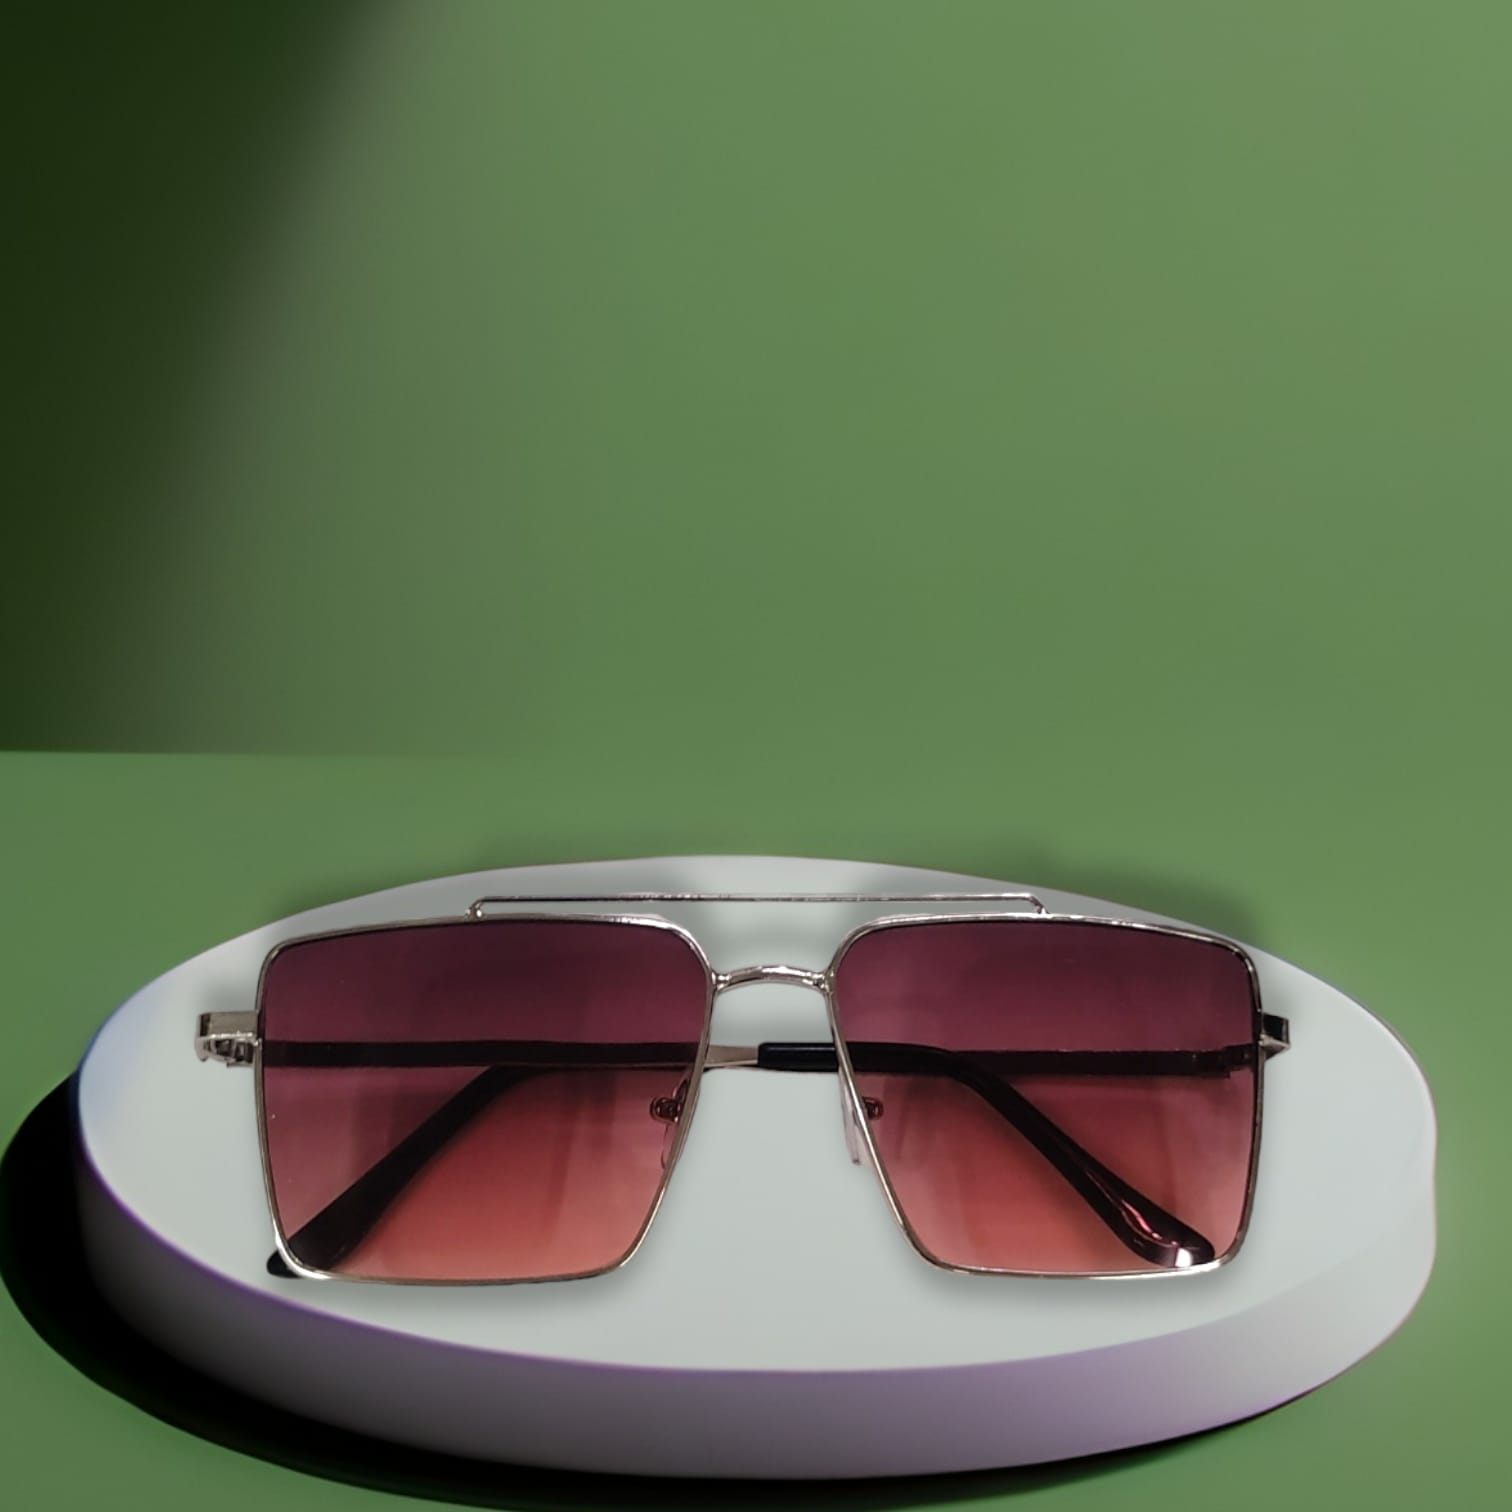 Unisex Square Sunglasses. Silver Color Frame.